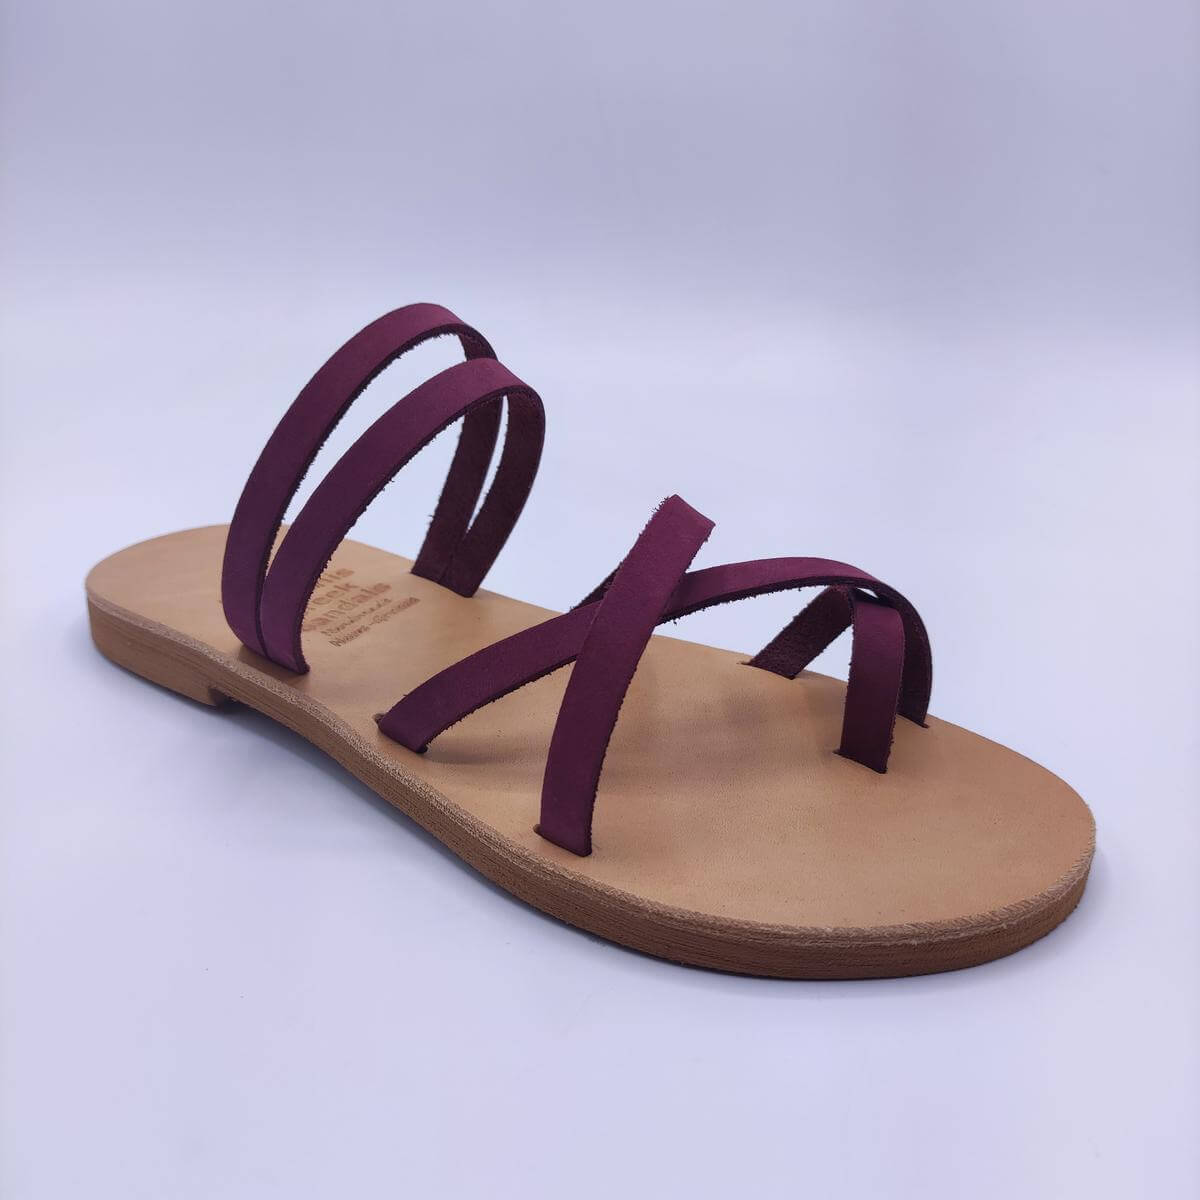 Naxos Women's Sandals Toe Loop - Leather Sandals